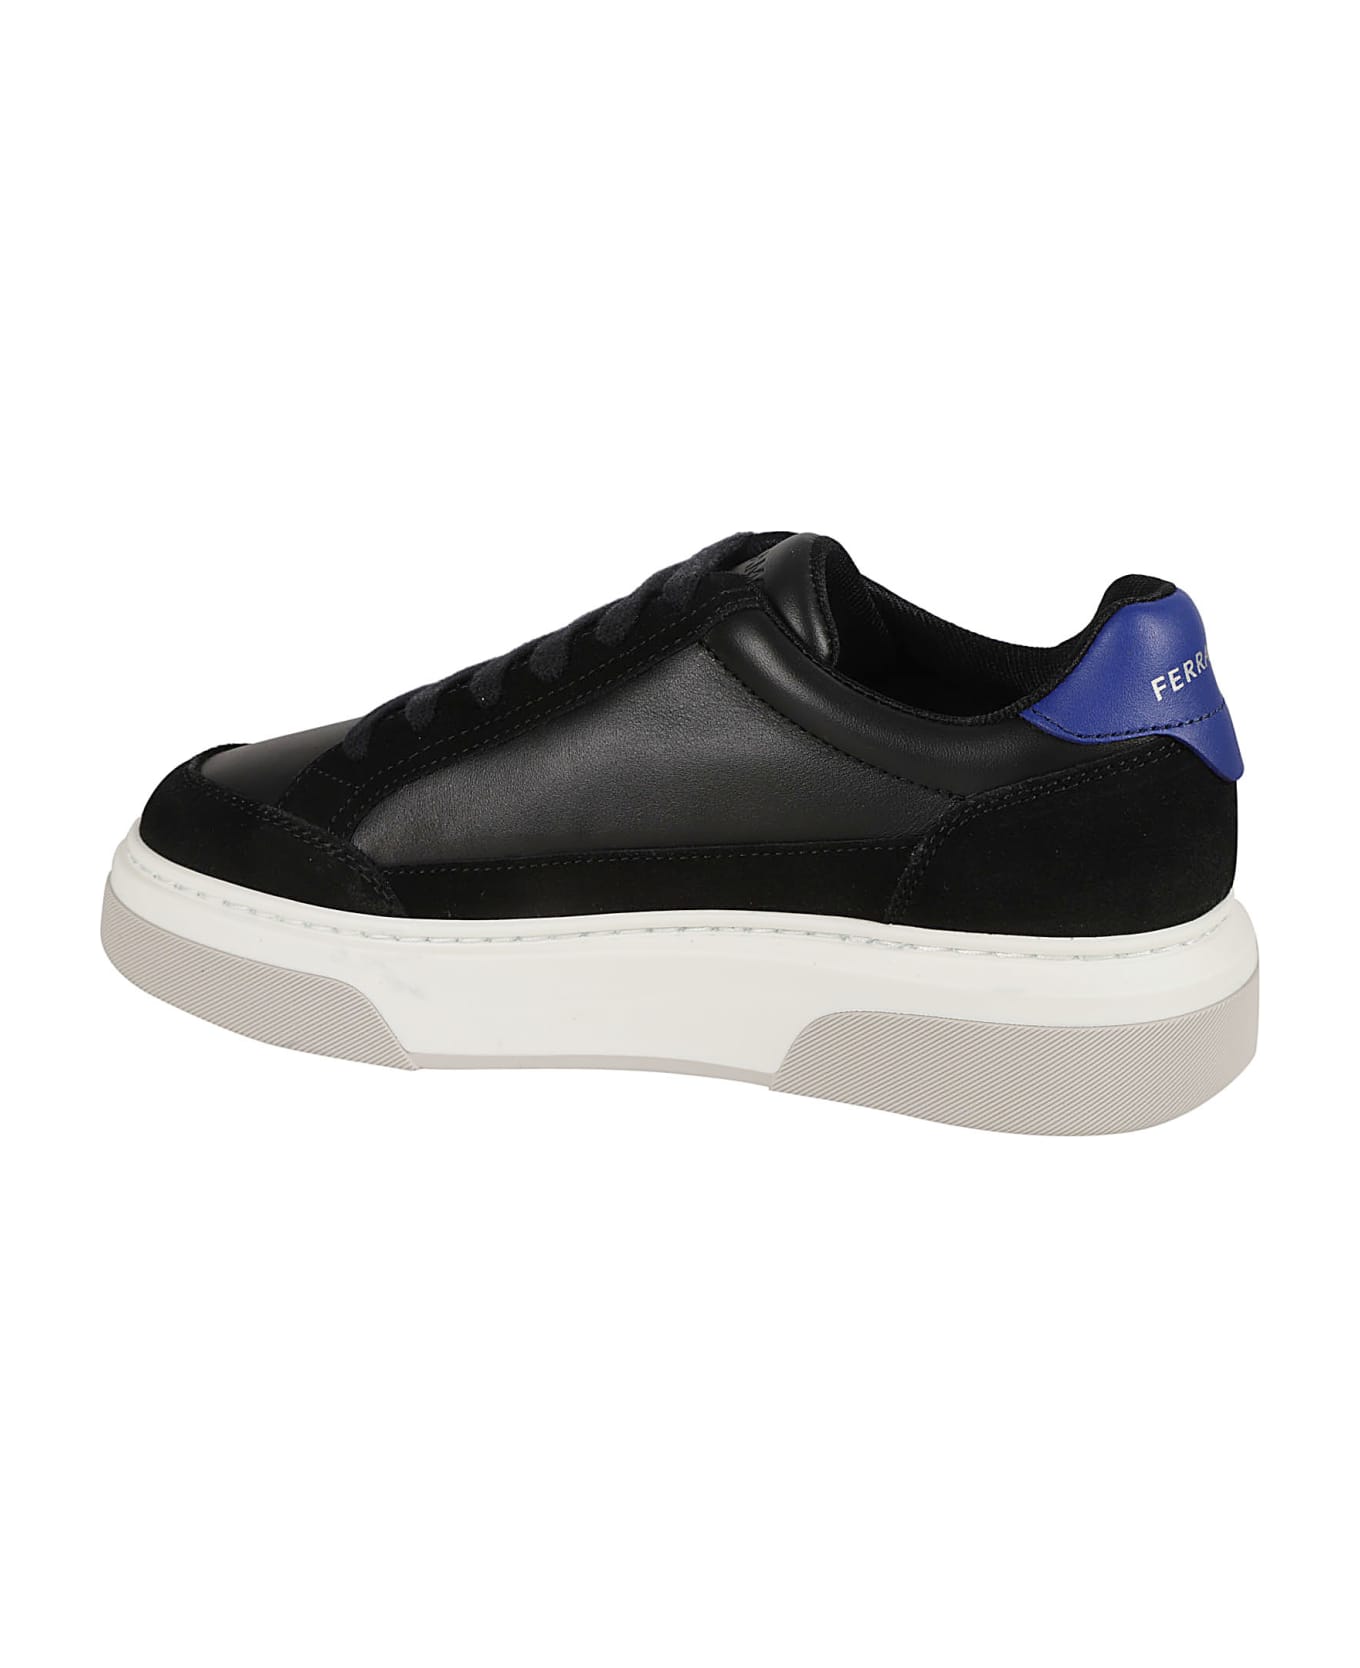 Ferragamo 'cassina' Black Leather Blend Sneakers - Black